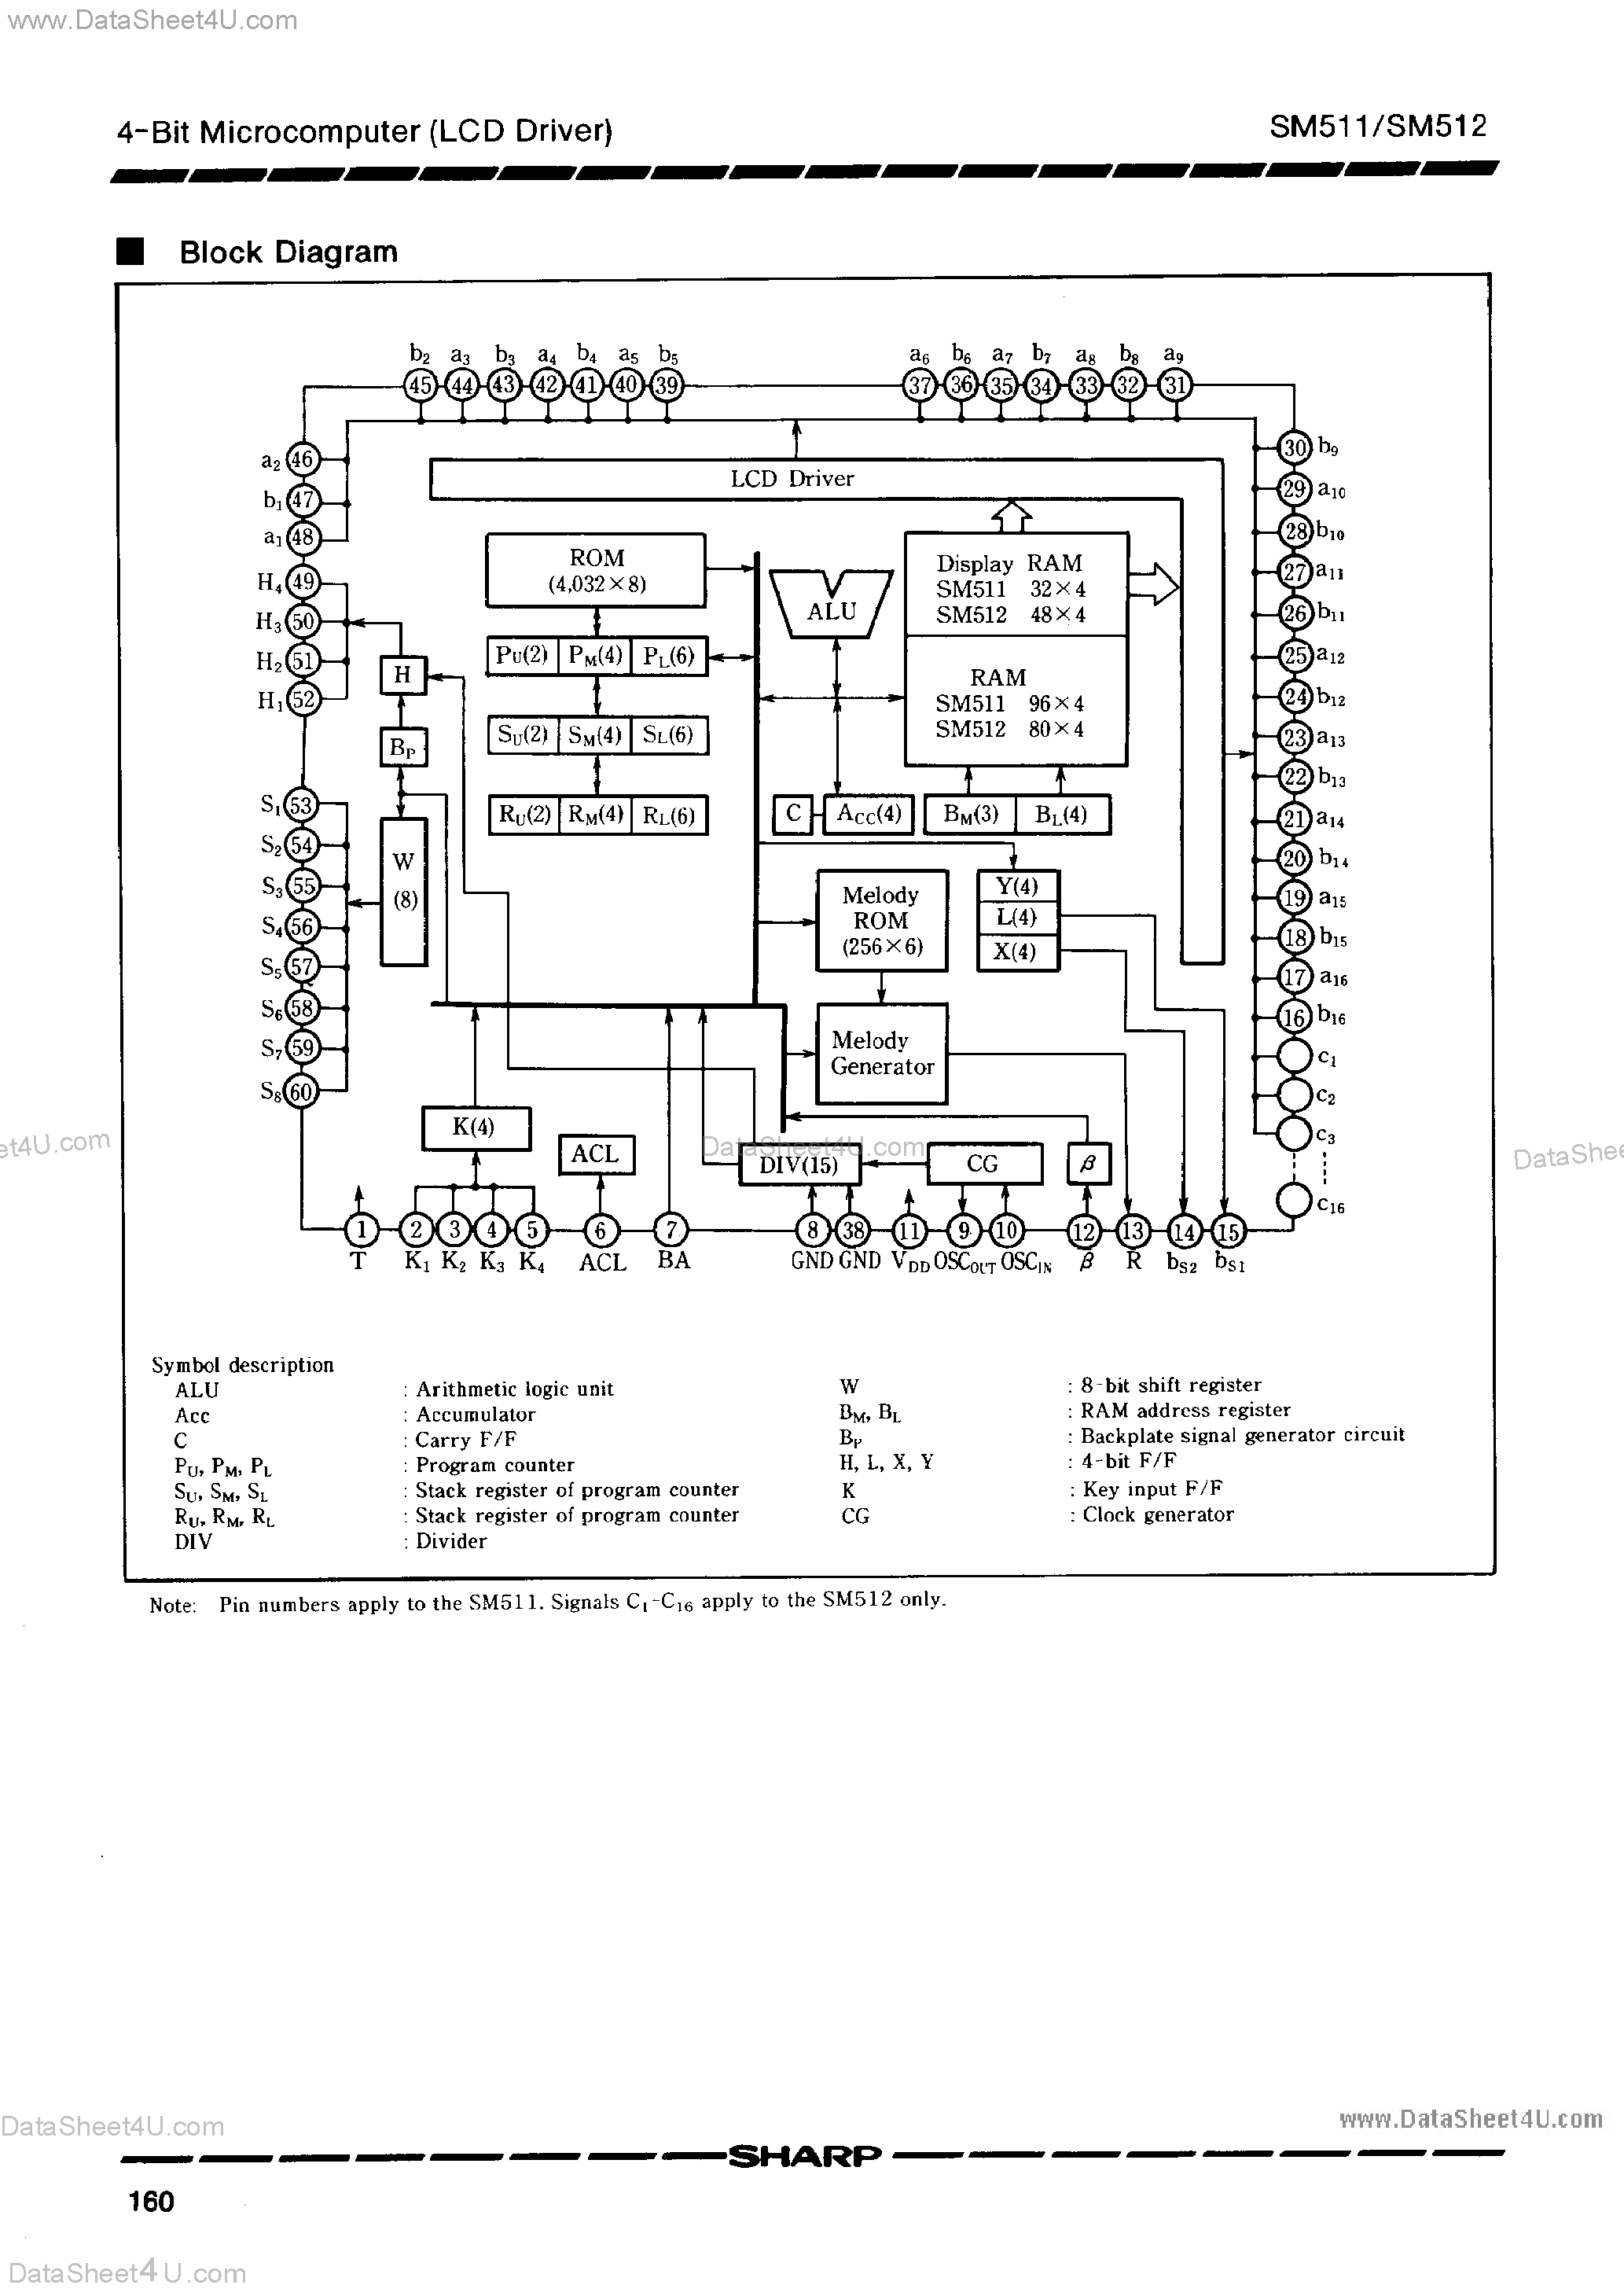 Datasheet SM511 - (SM511 / SM512) 4-Bit Microcomputer page 2